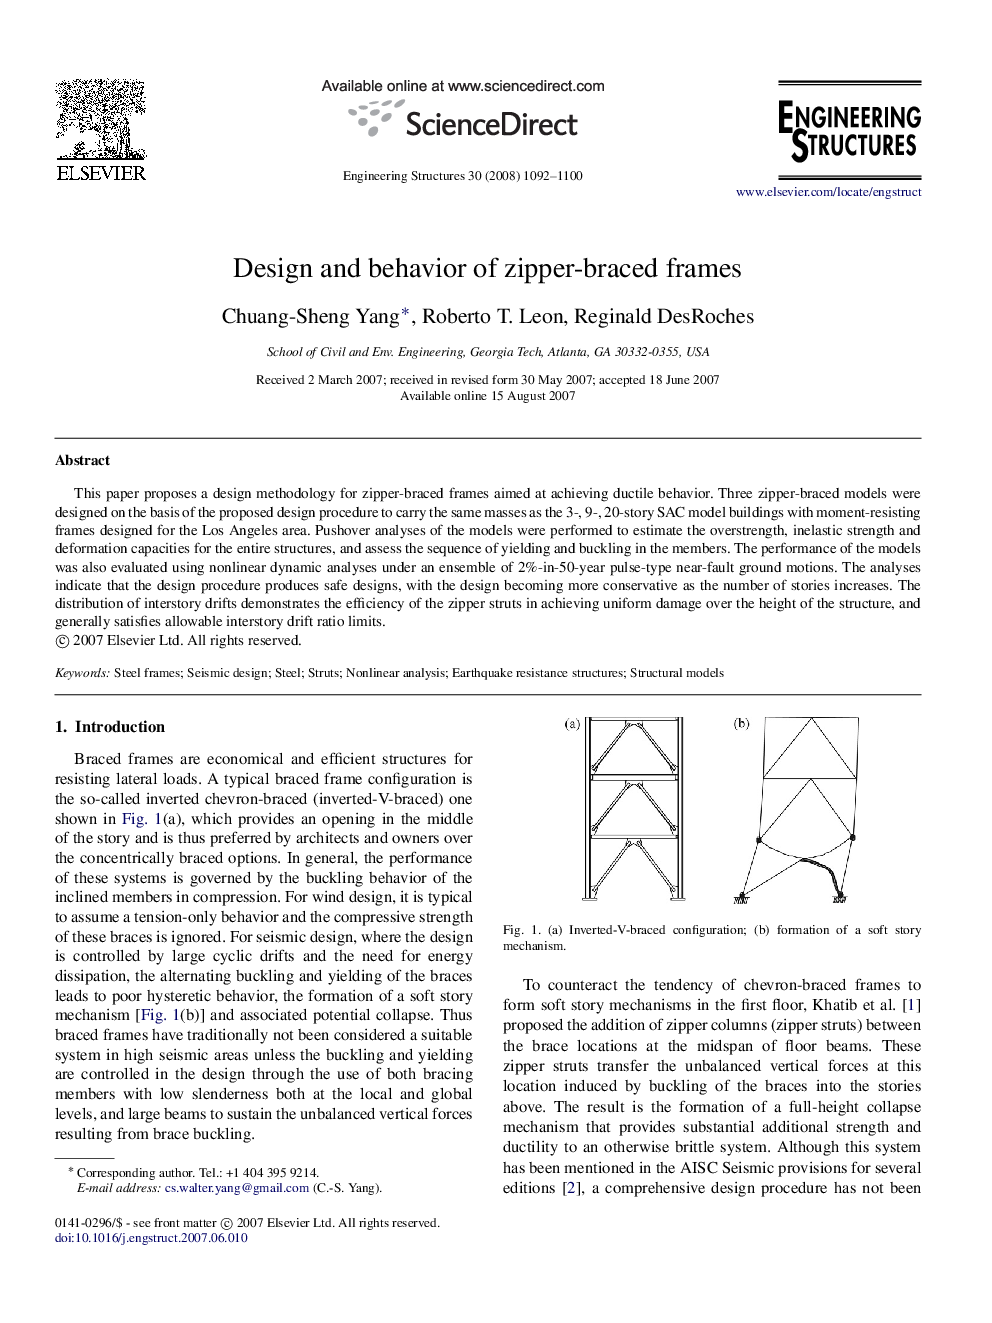 Design and behavior of zipper-braced frames